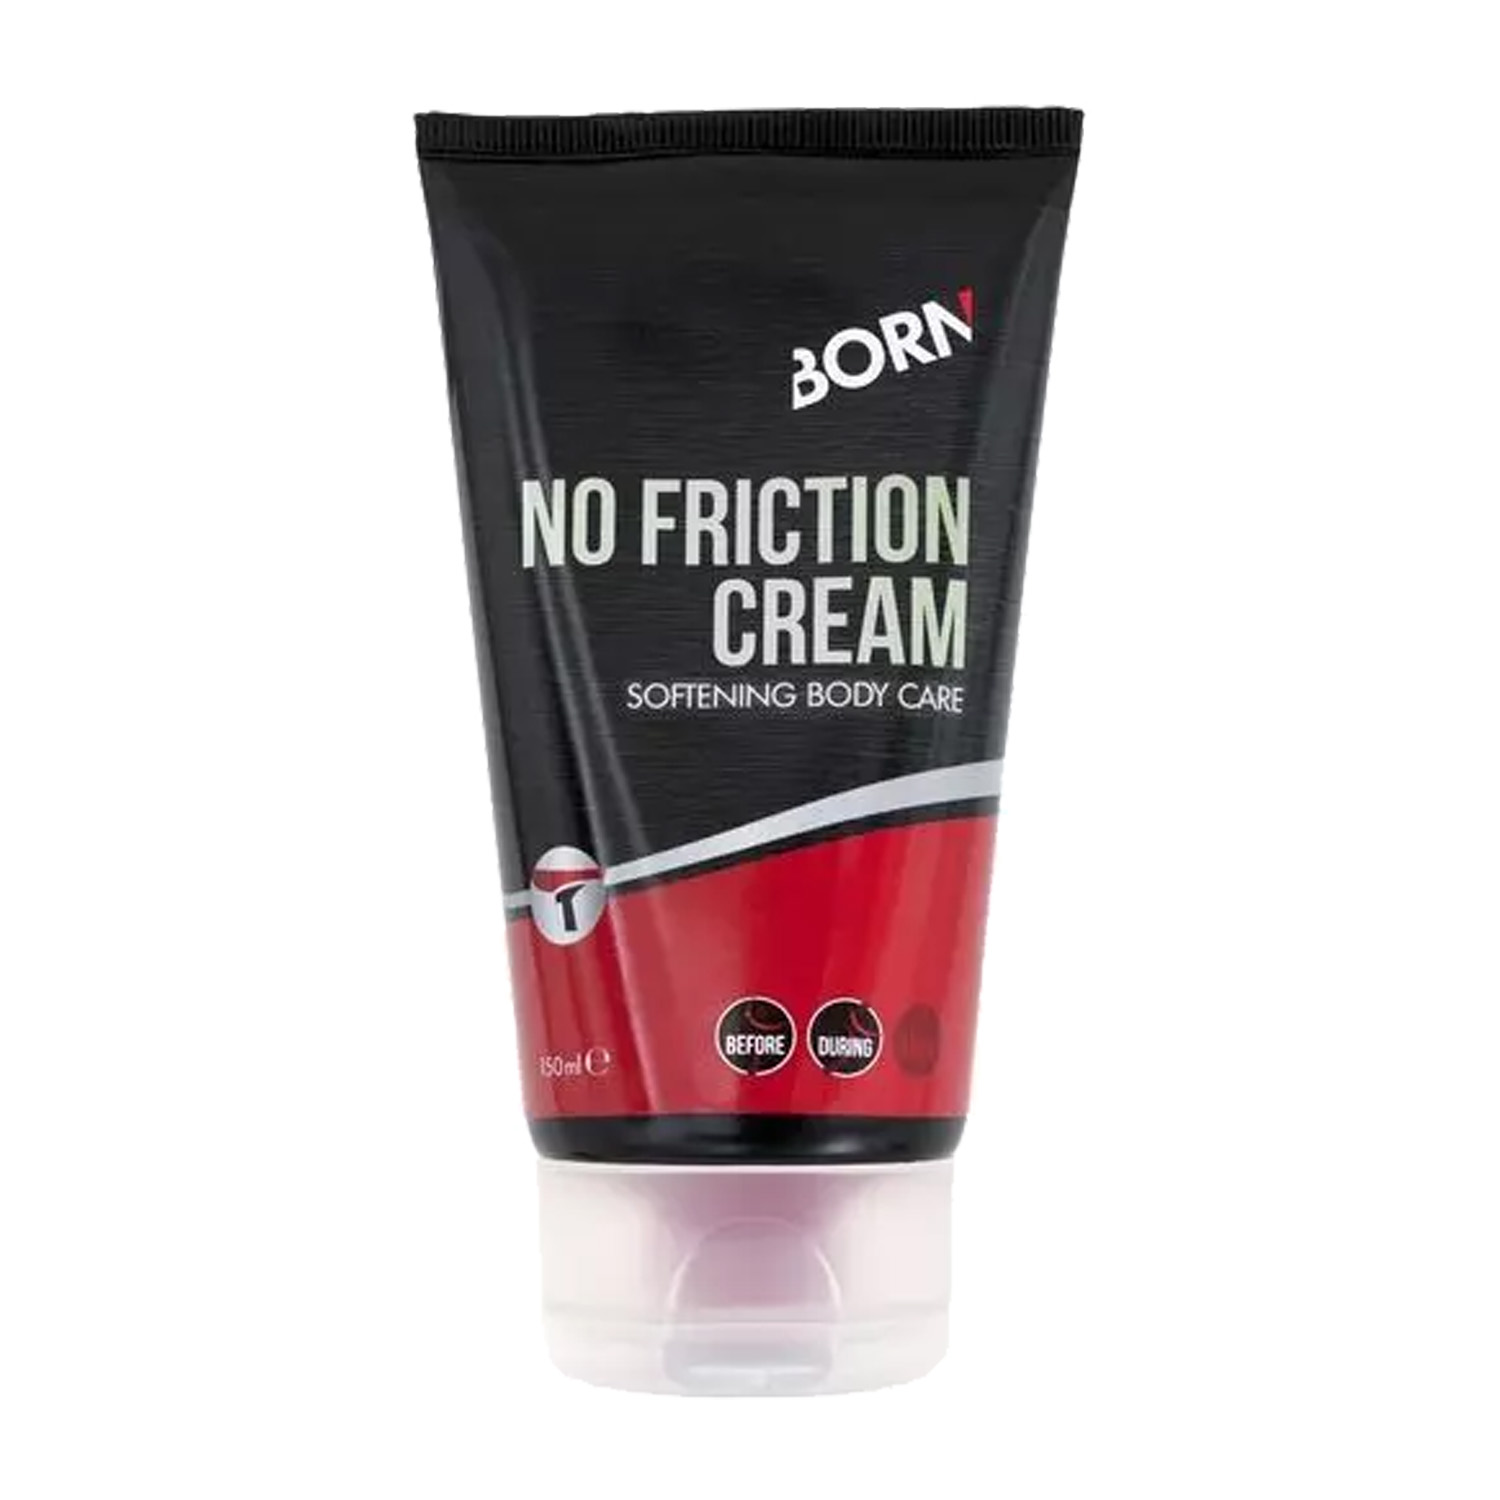 Born No Friction cream